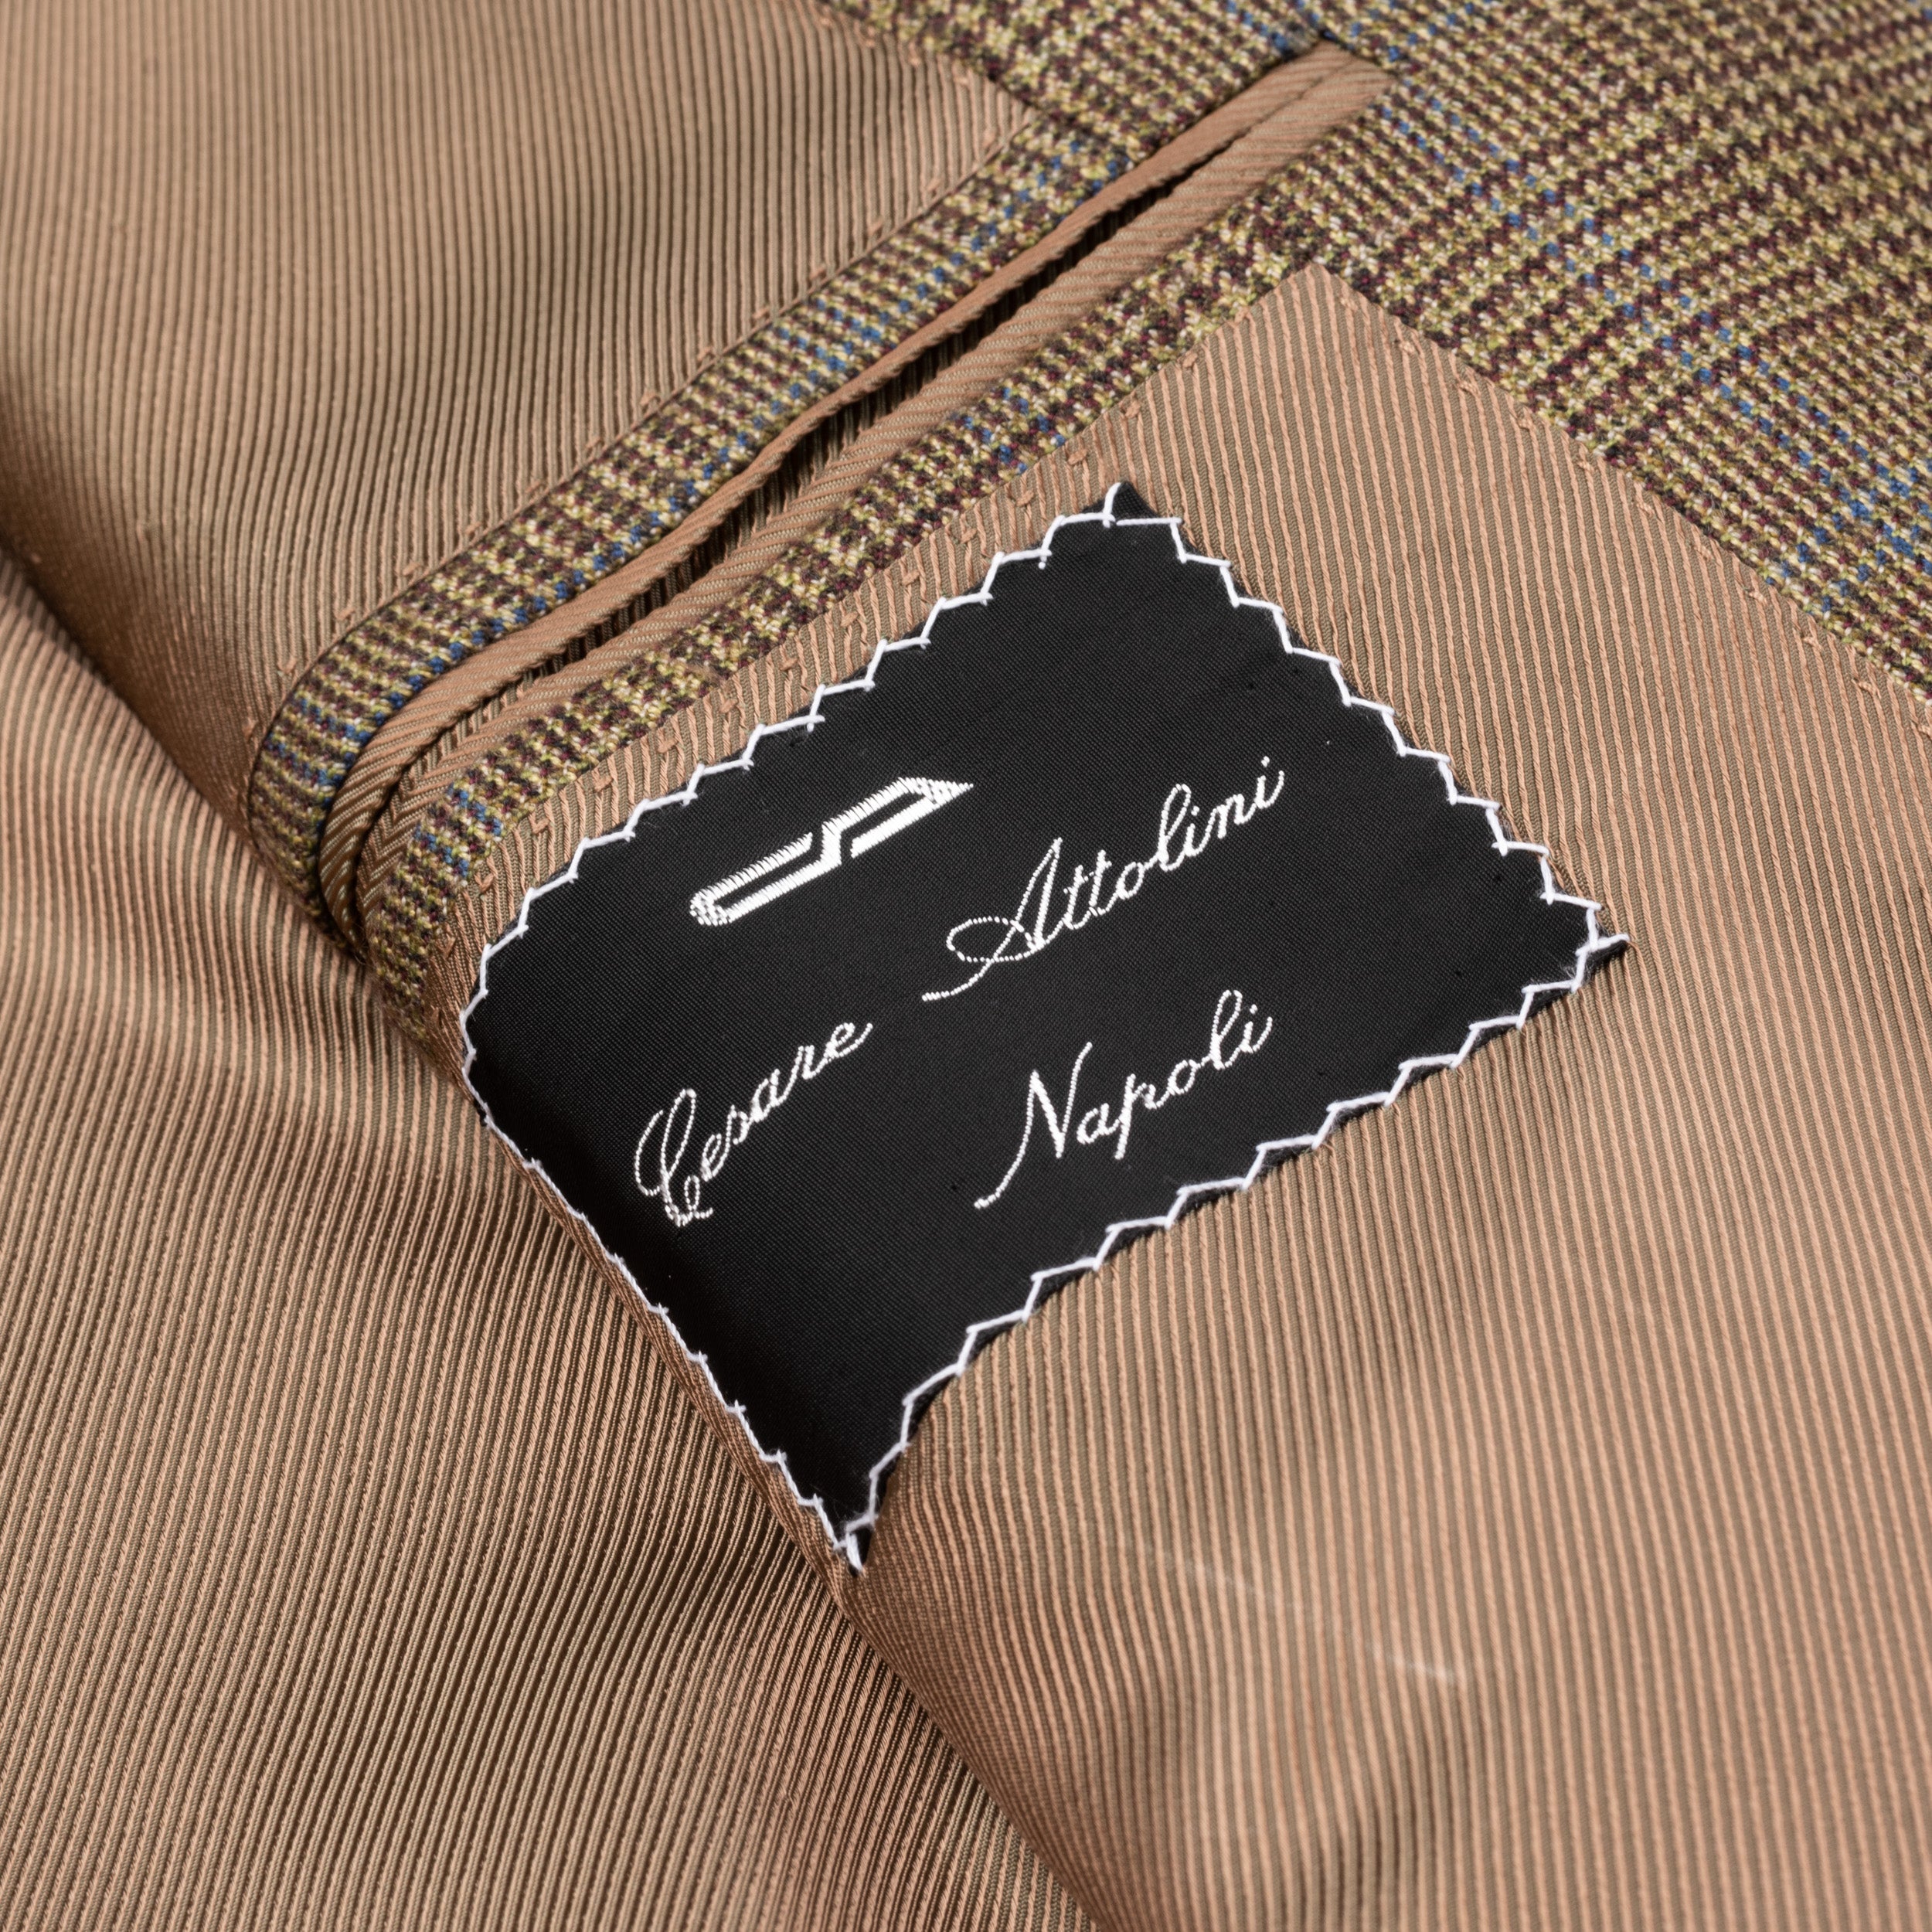 CESARE ATTOLINI Olive Prince of Wales Wool Cashmere Blazer Jacket 50 NEW US 40 CESARE ATTOLINI